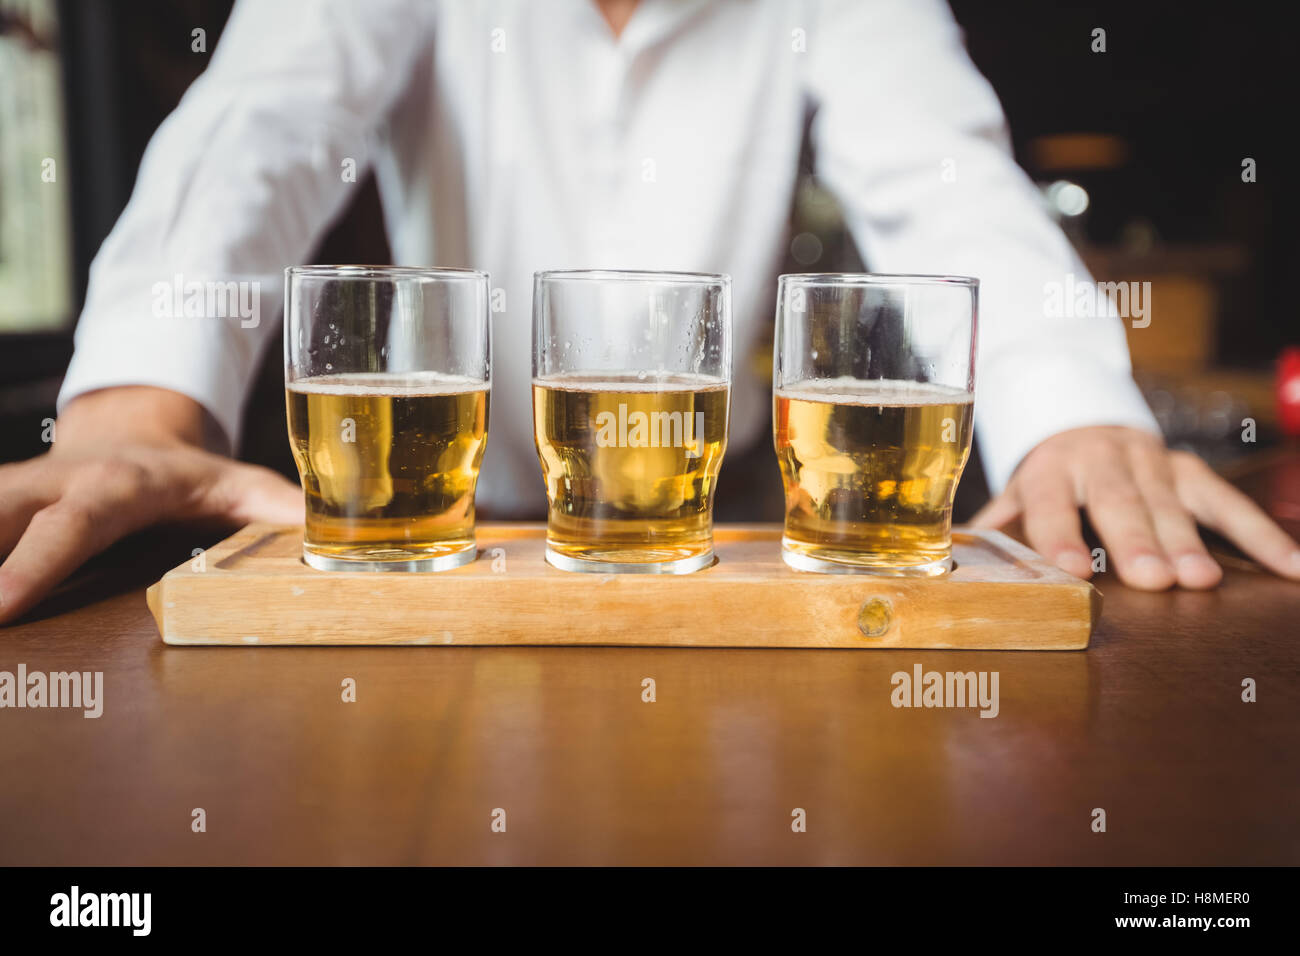 https://c8.alamy.com/comp/H8MER0/close-up-of-beer-glasses-on-the-bar-counter-H8MER0.jpg